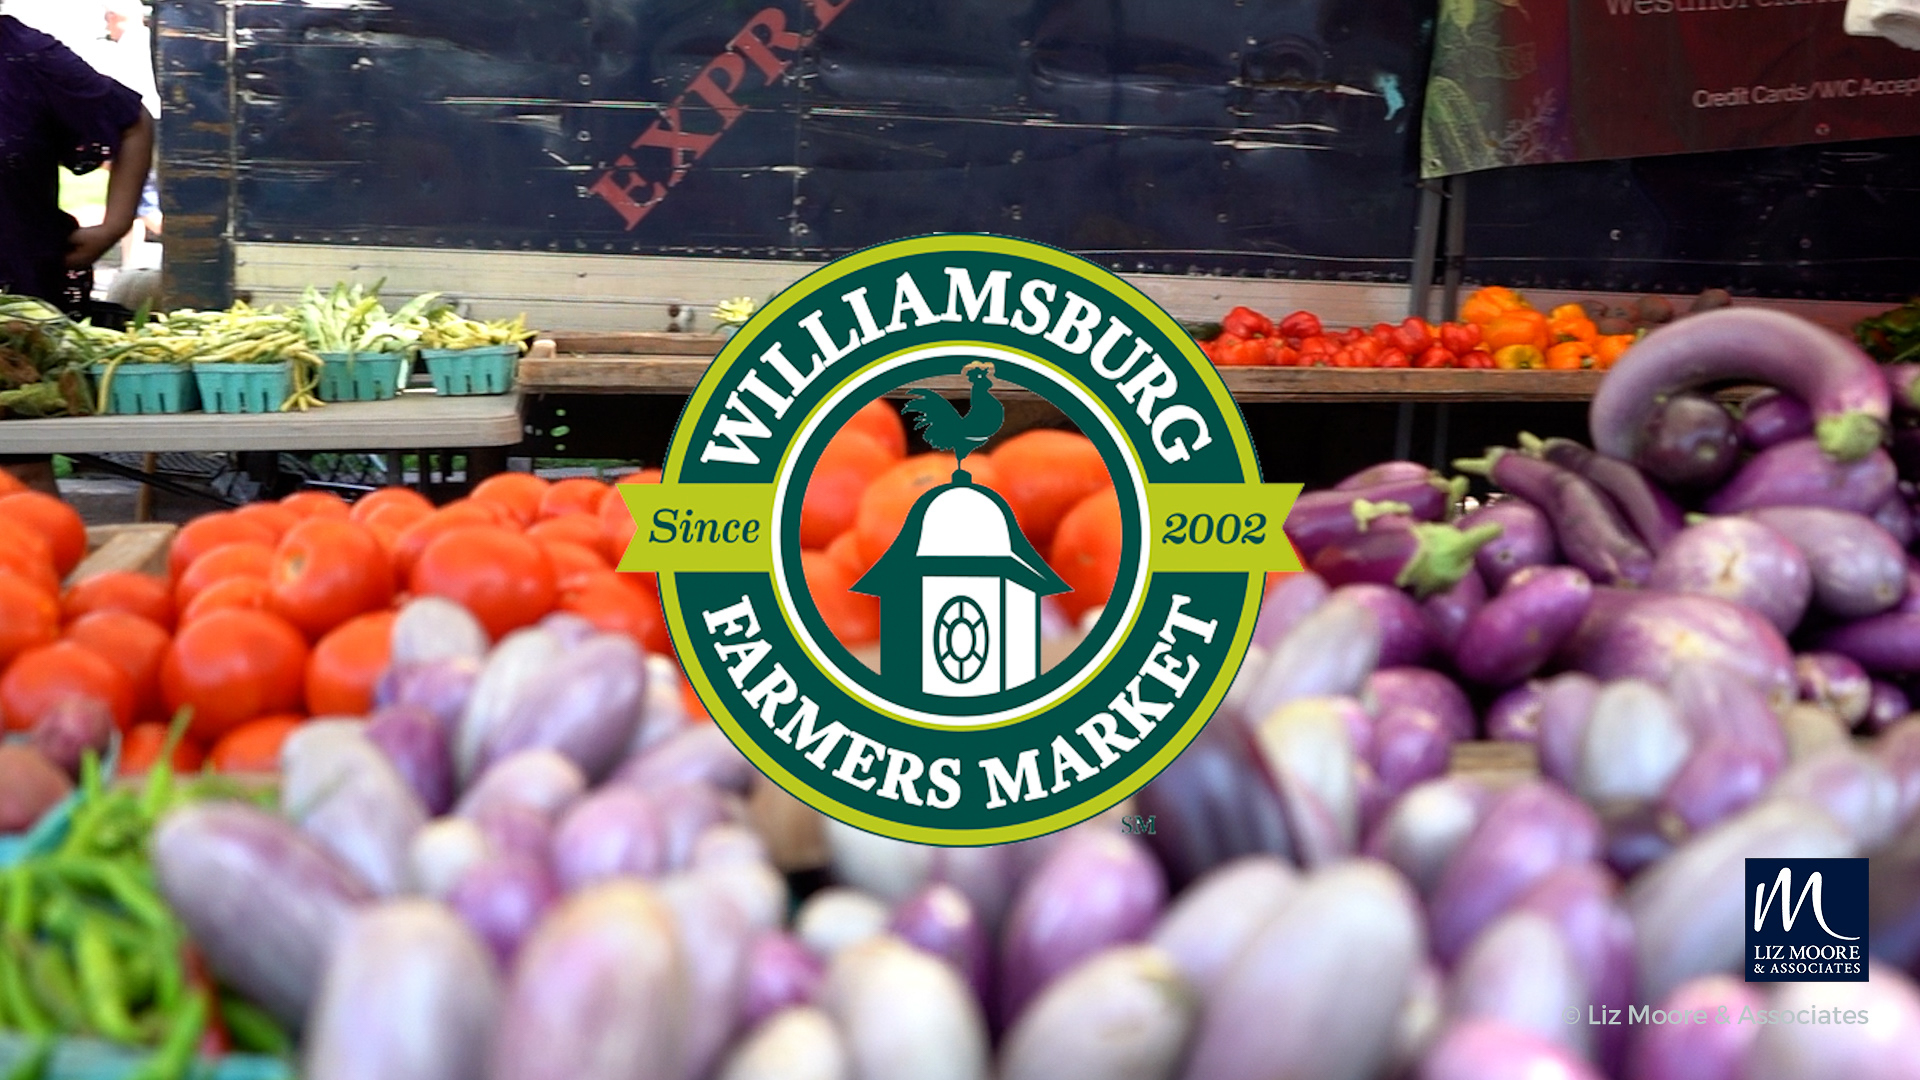 Williamsburg Farmers Market - A Local Favorite